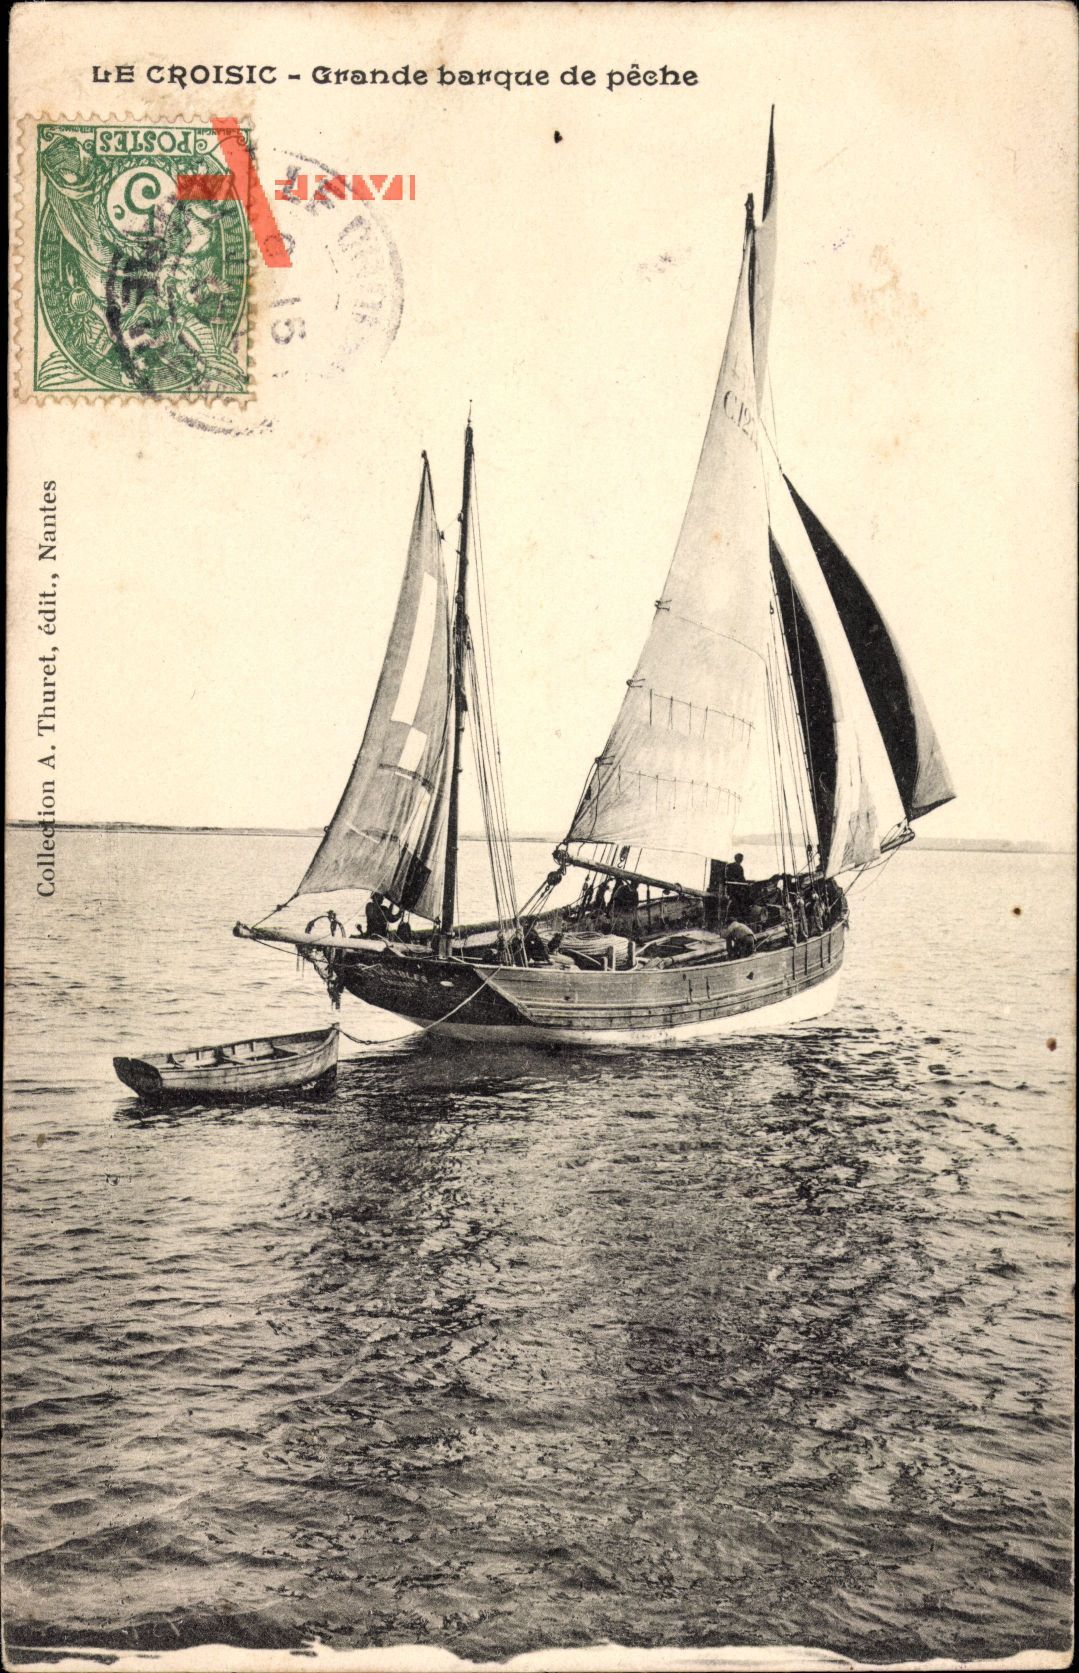 Le Croisic, Grande barque de peche, Fischerboot auf dem Wasser